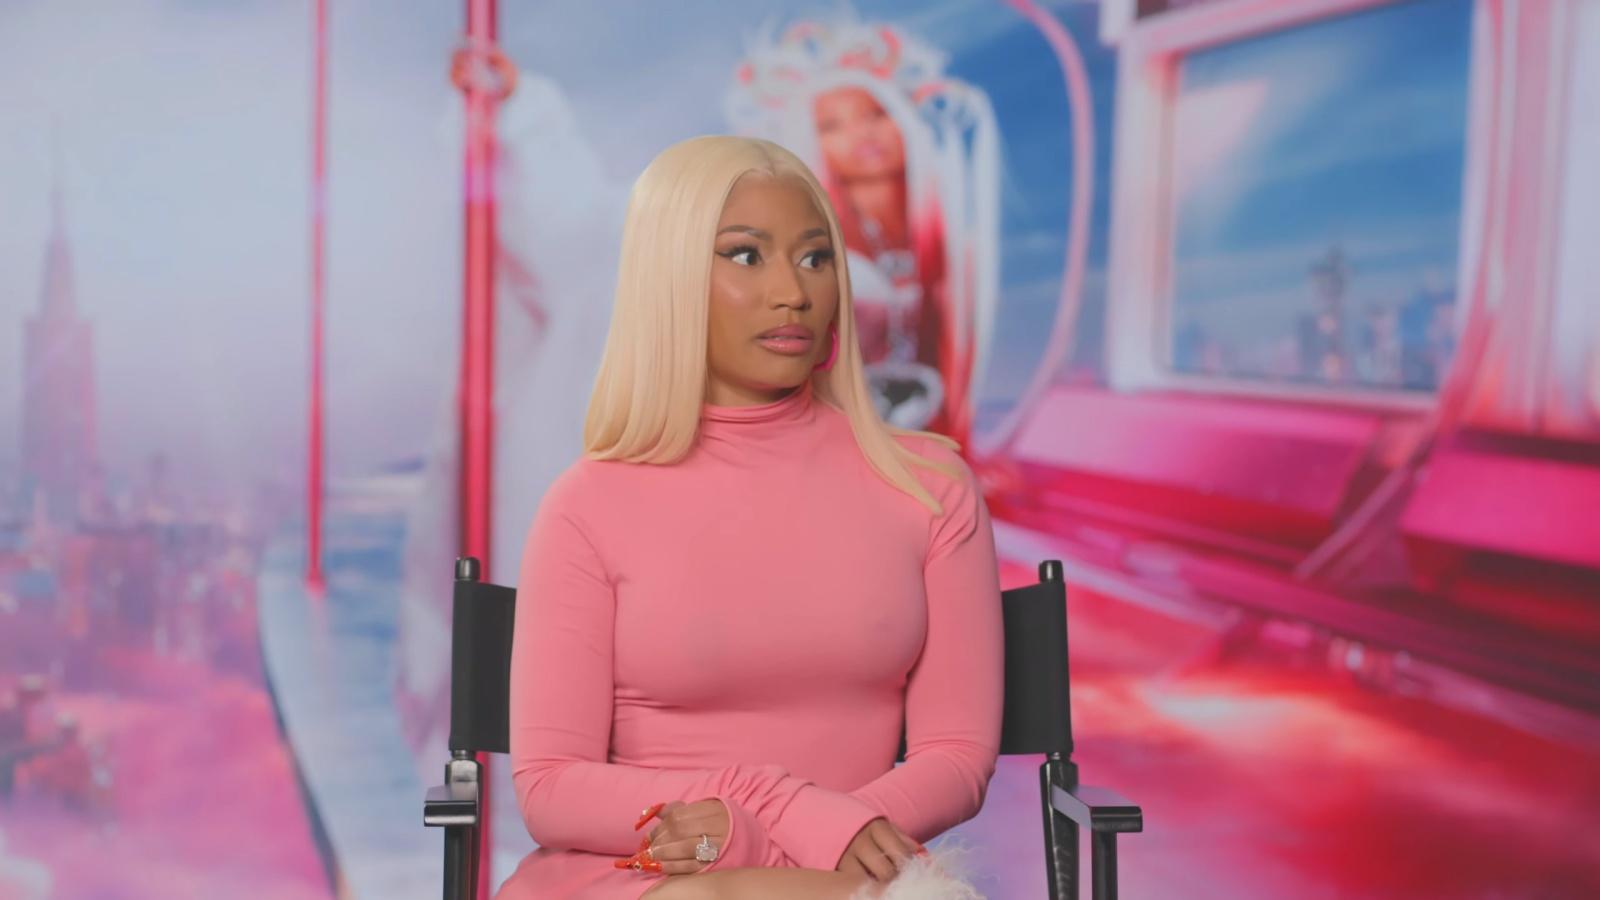 Nicki Minaj on a stage being interviewed